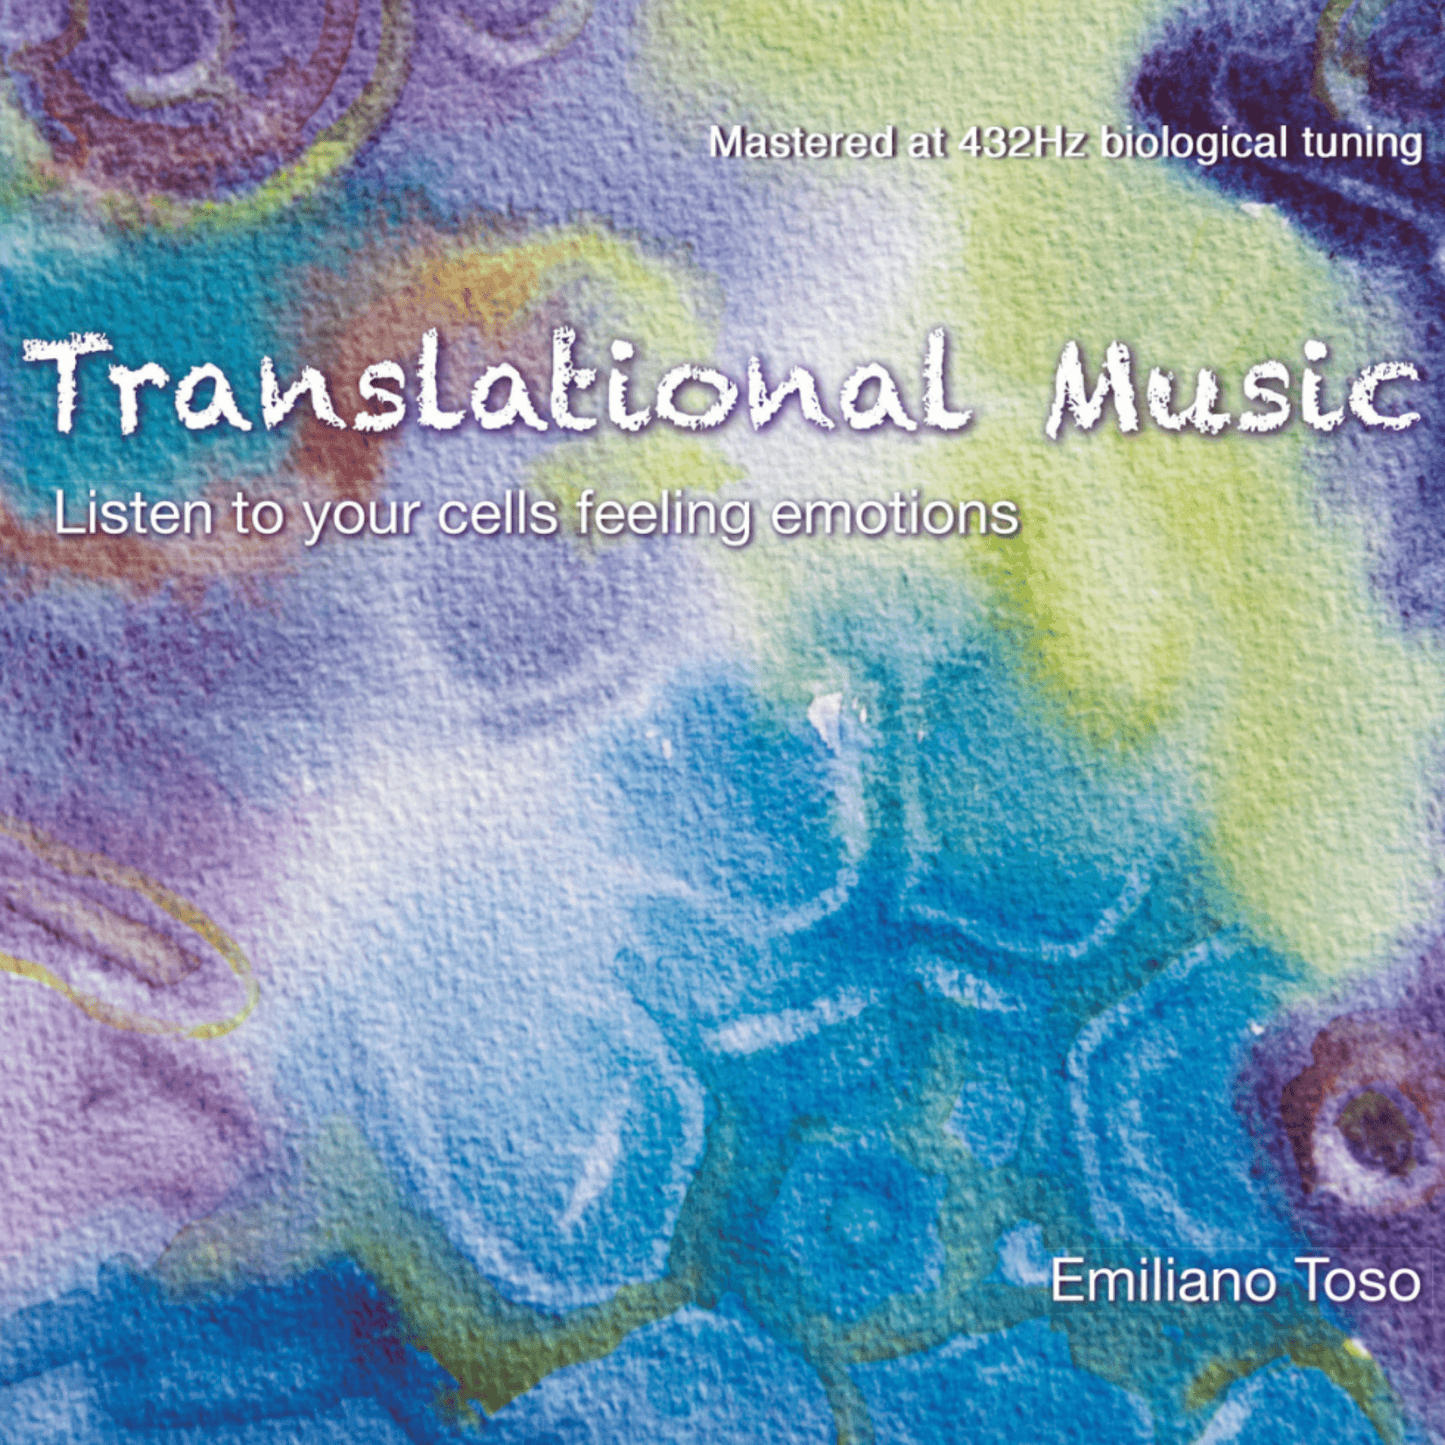 Album digitale "Translational Music"